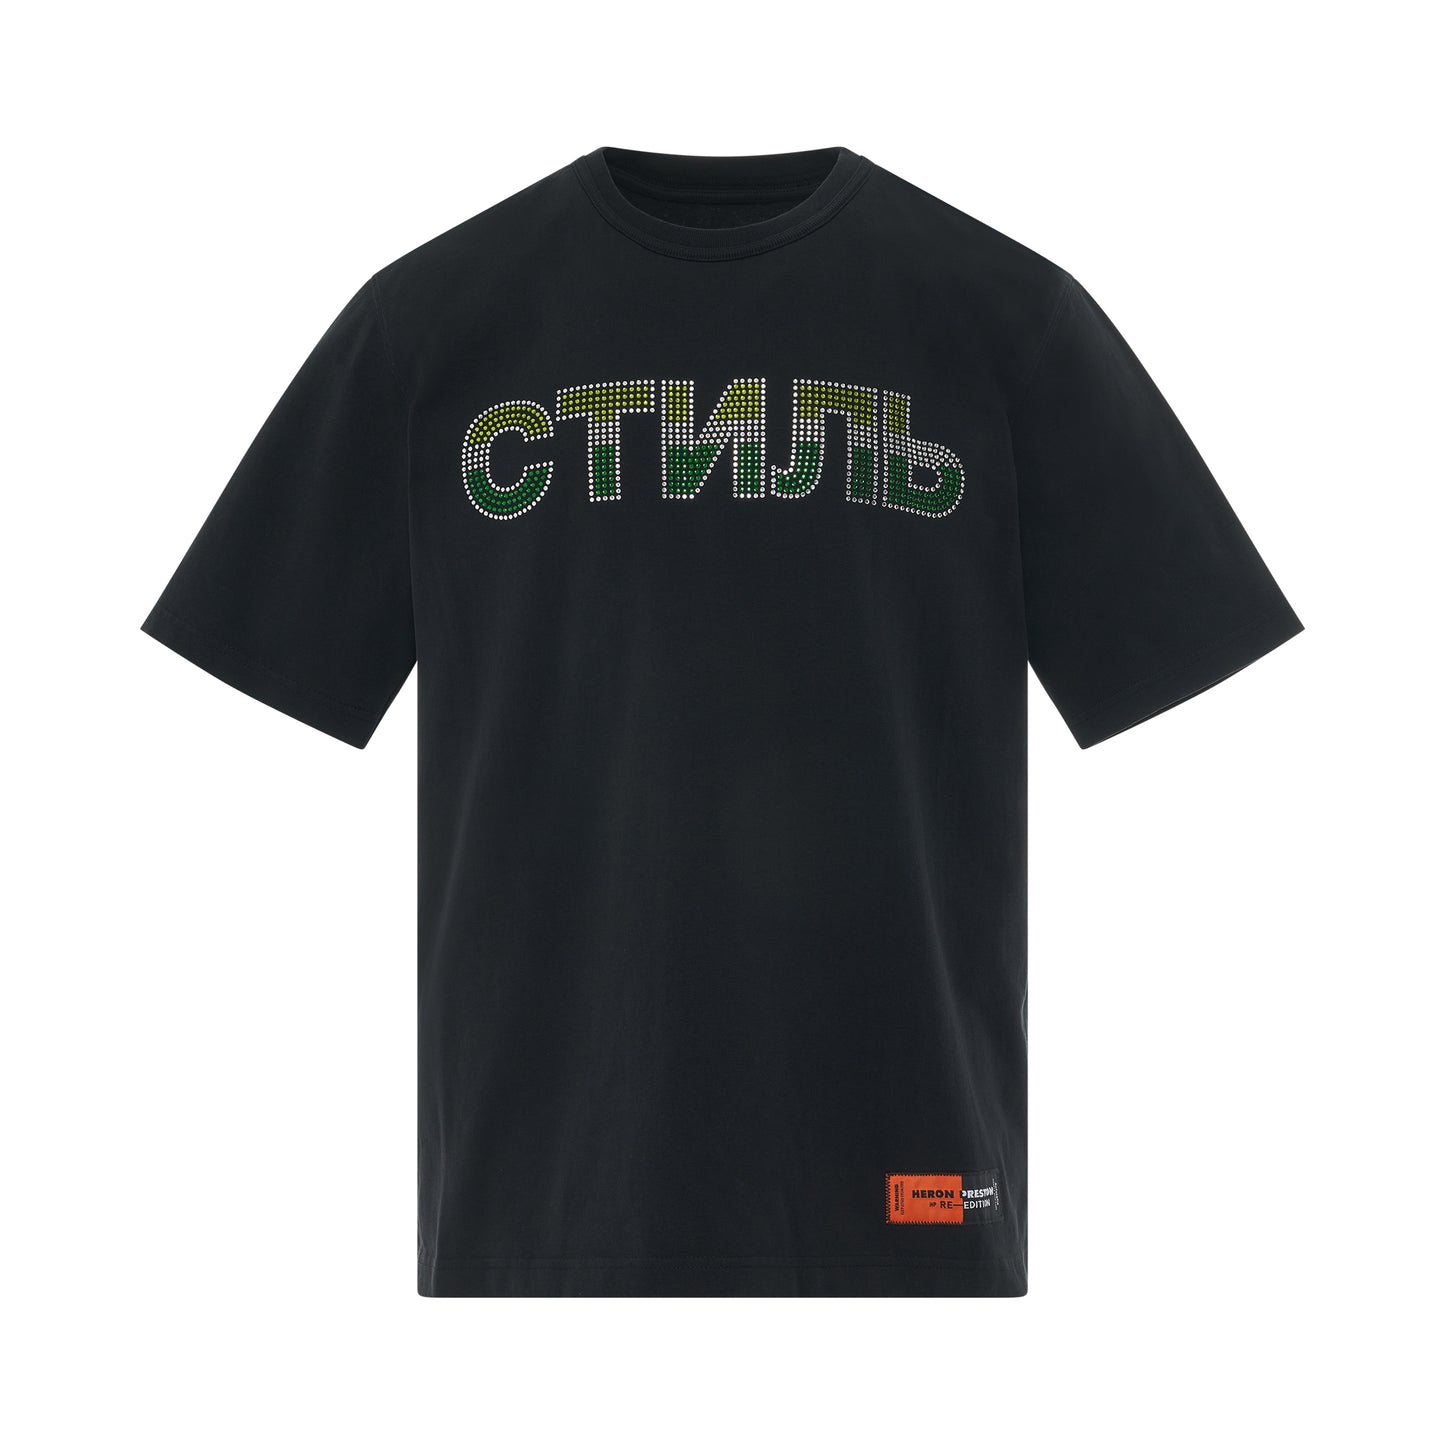 CTNMB Strass T-Shirt in Black